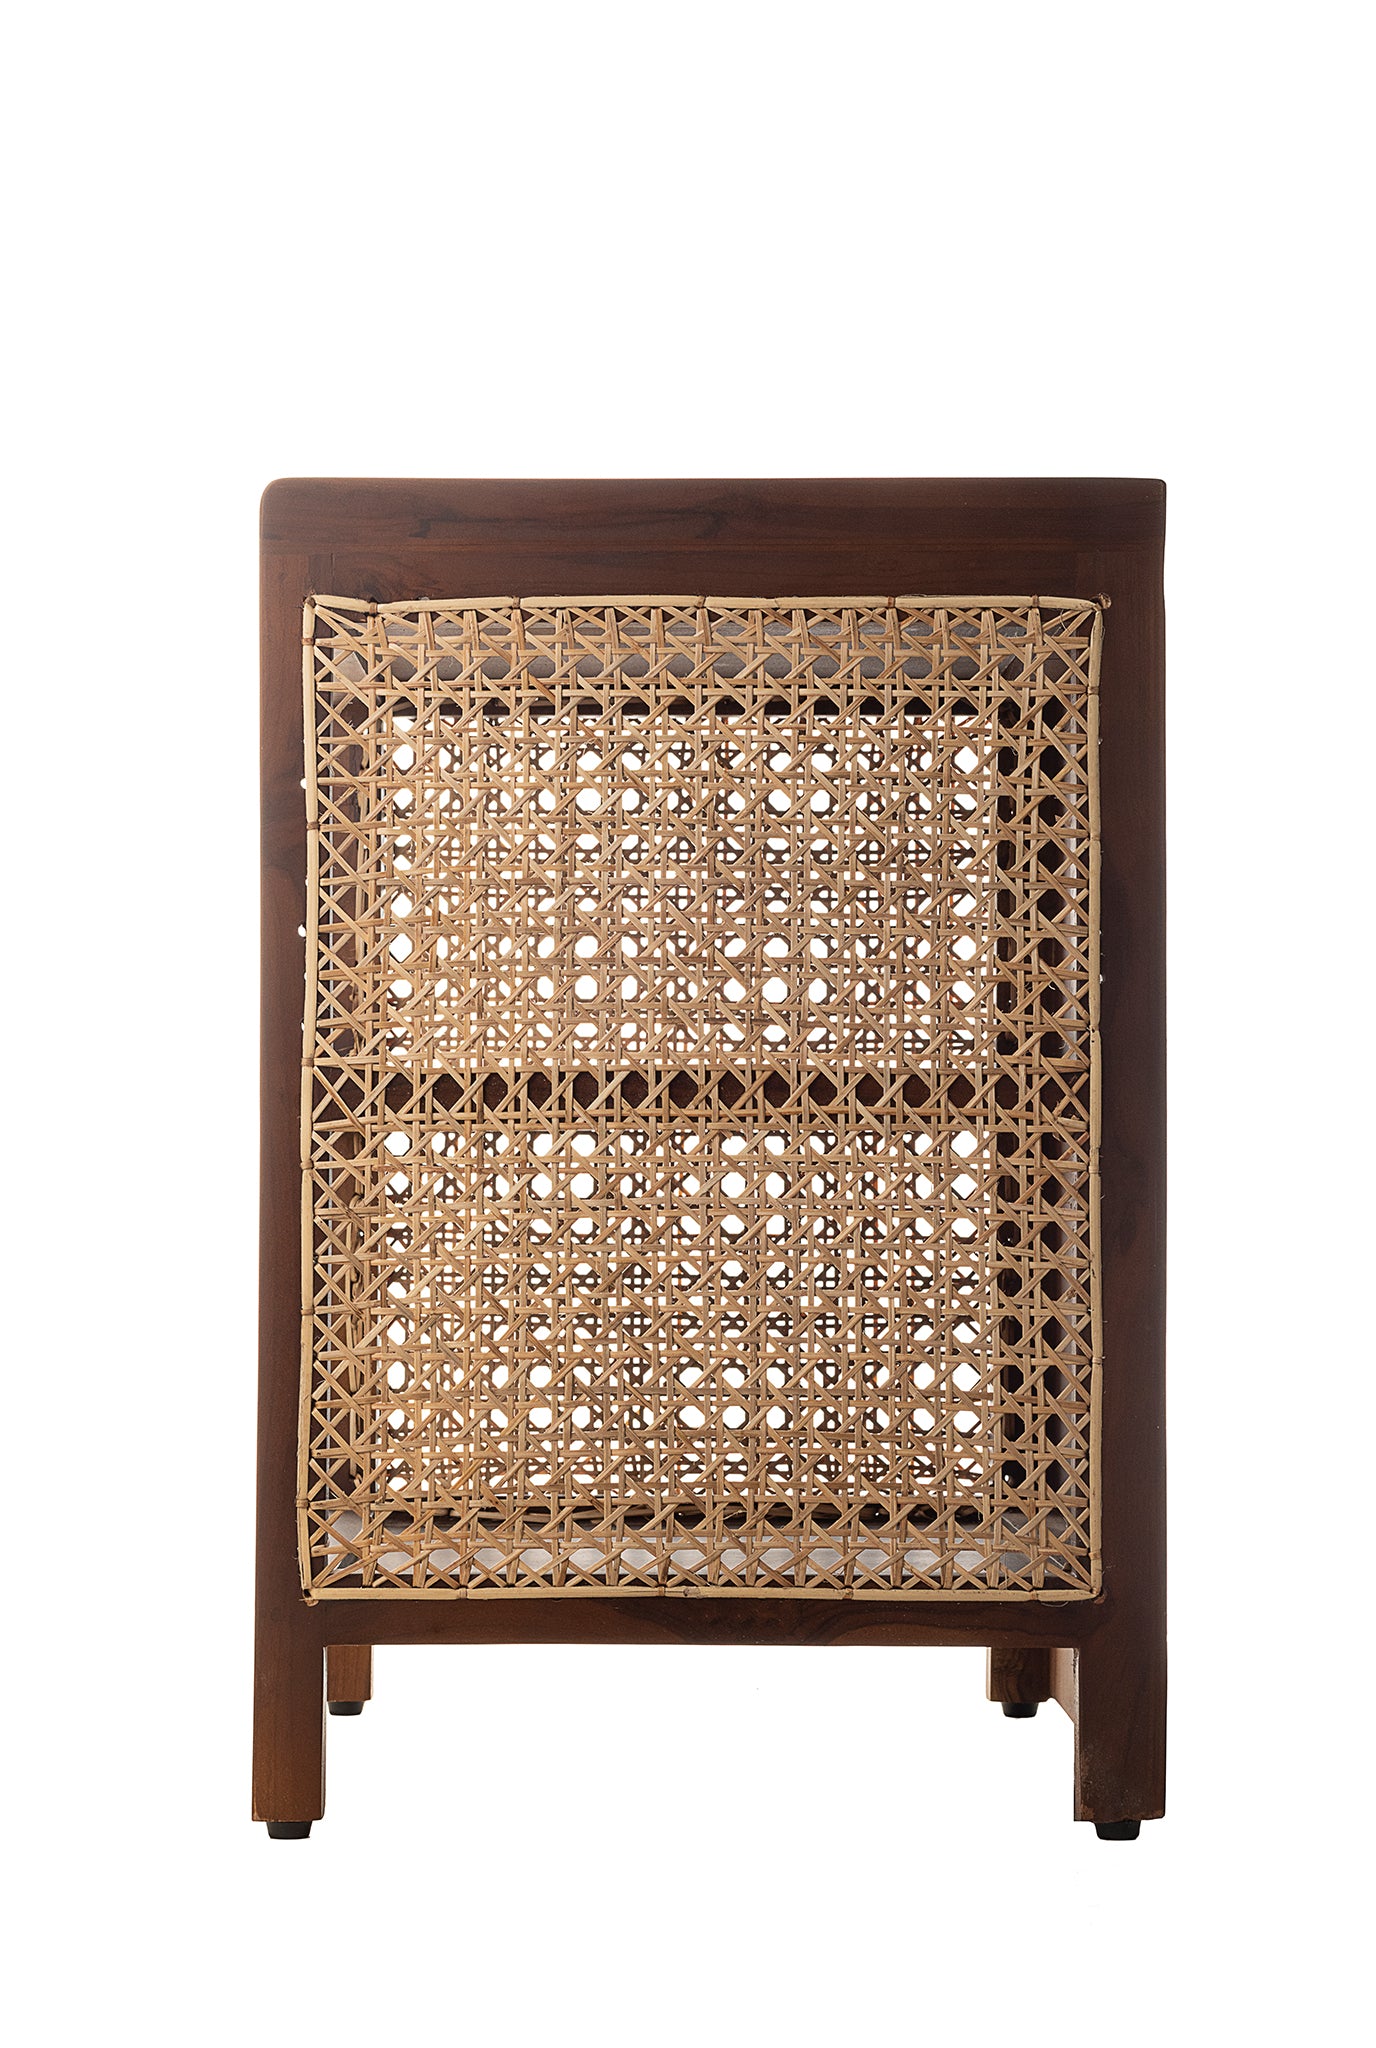 handcrafted-cane mesh-side table- storage-teak frame-